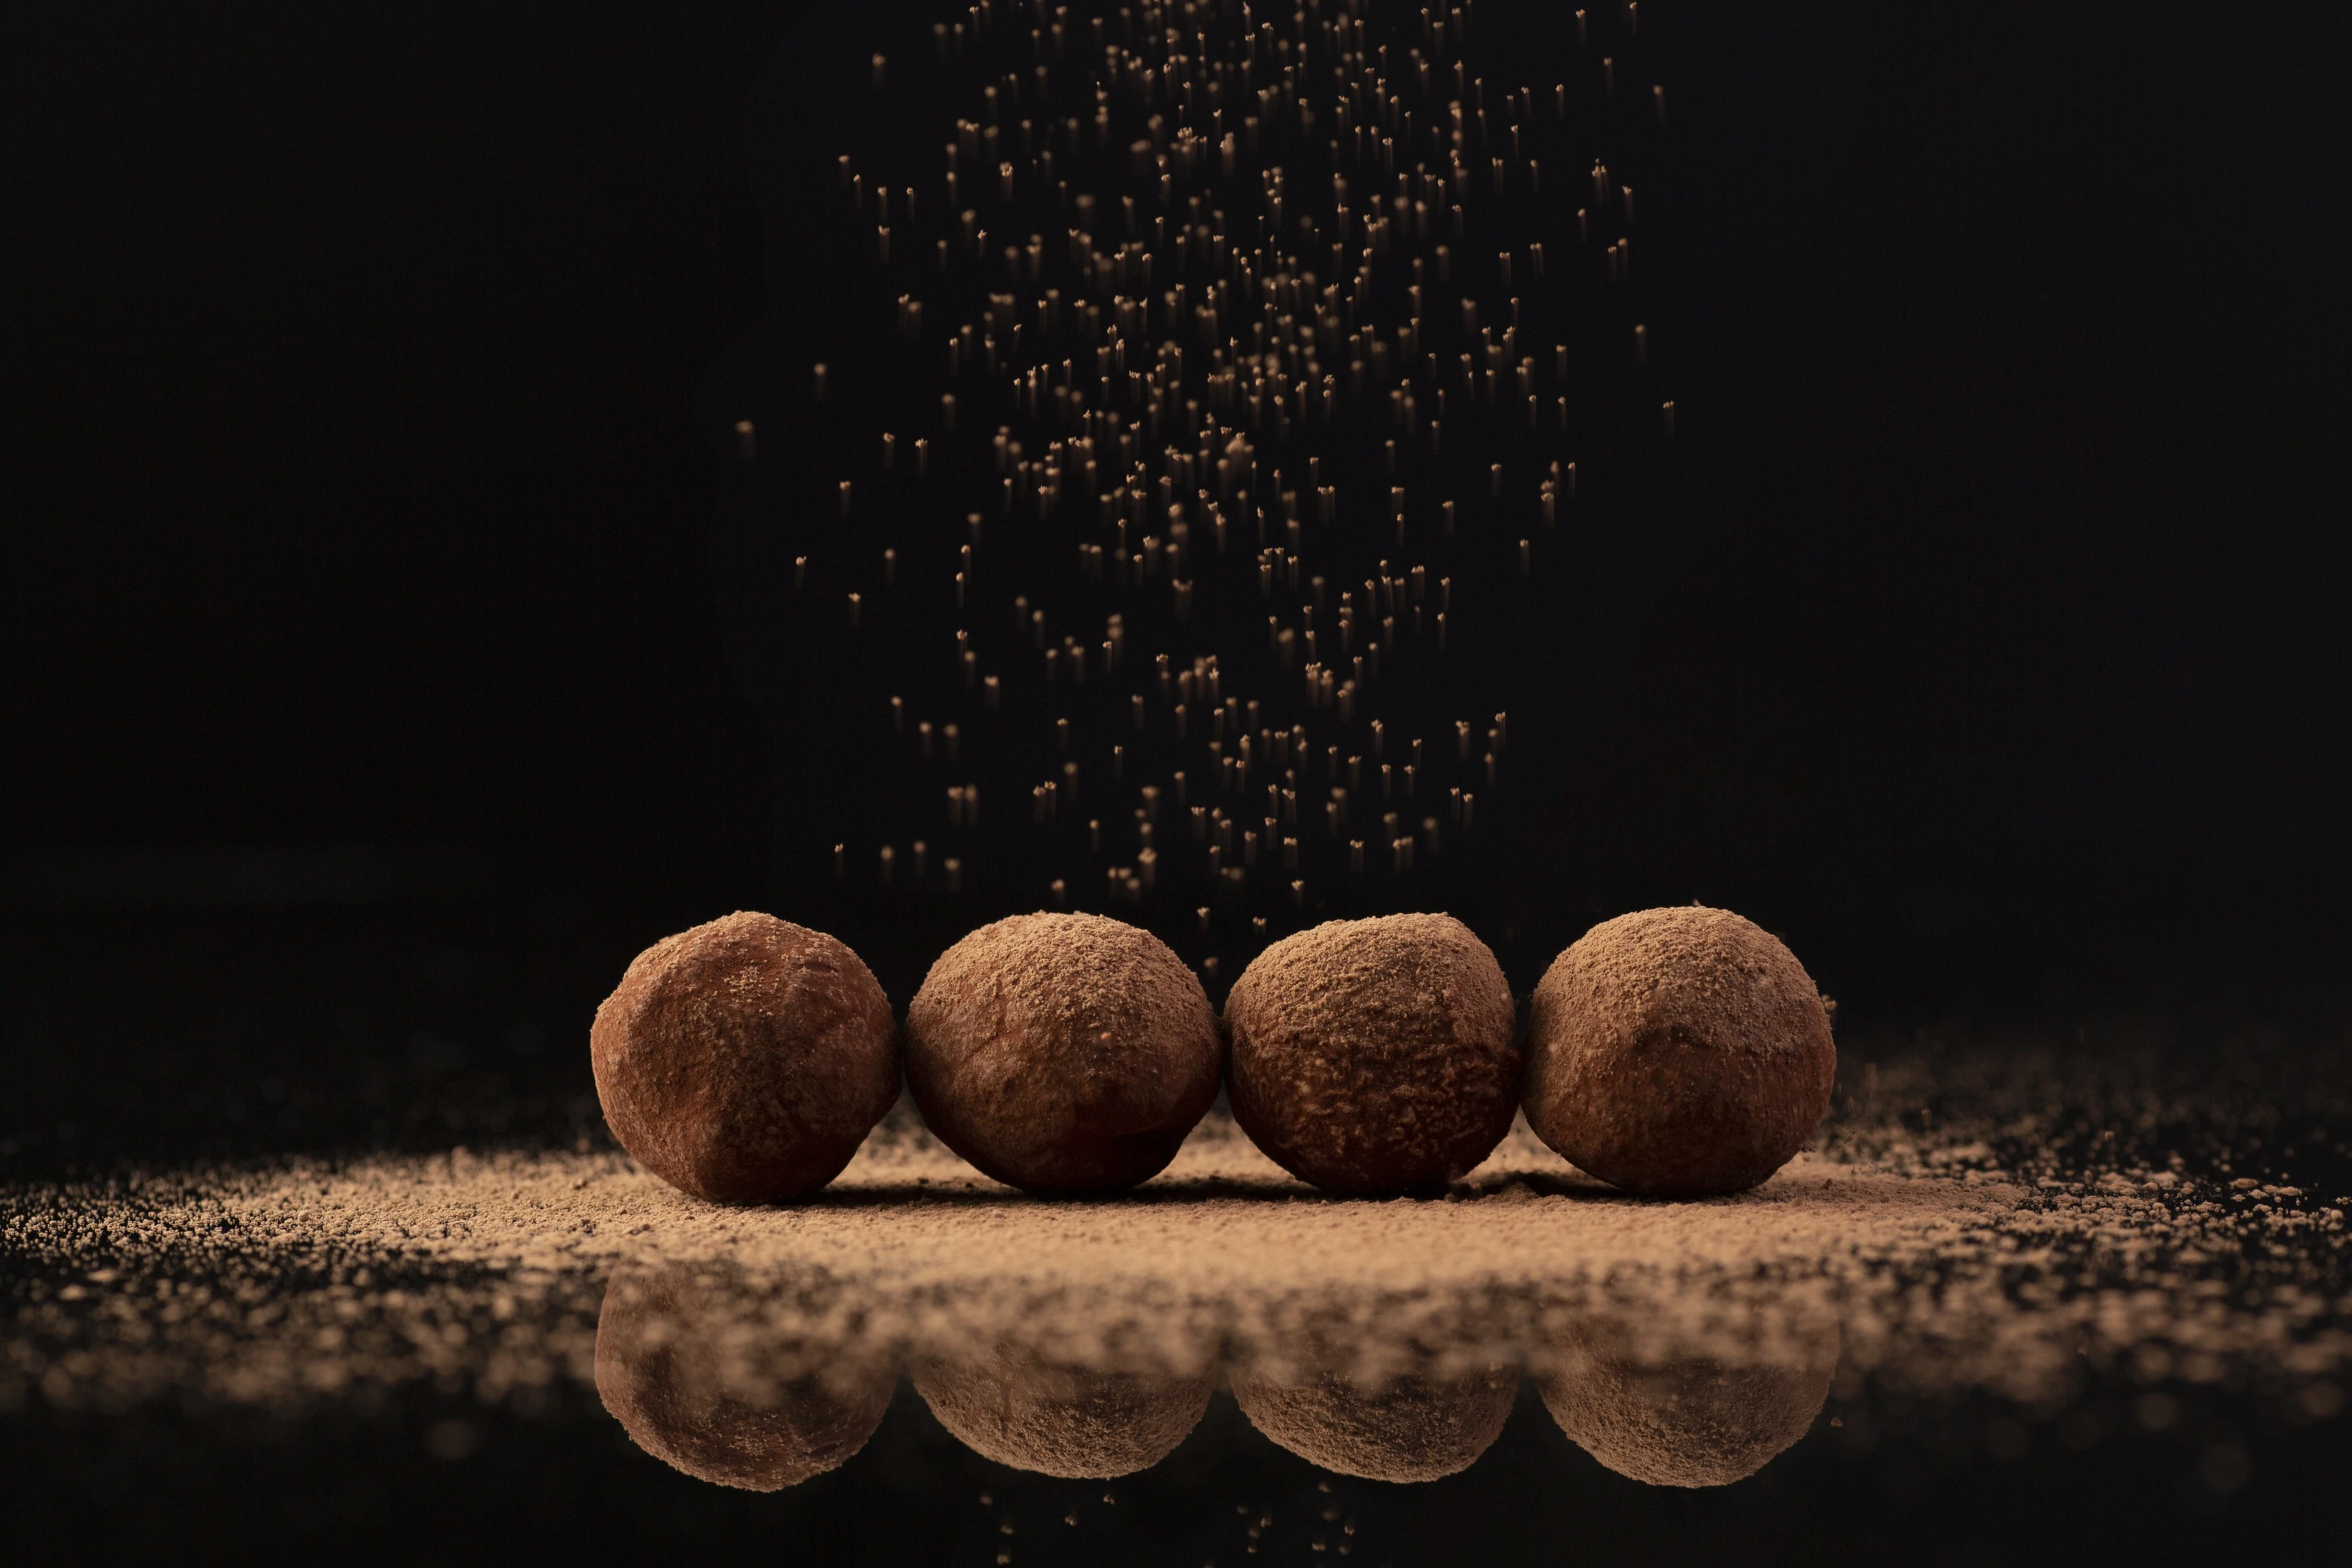 Cocoa sprinkled truffles